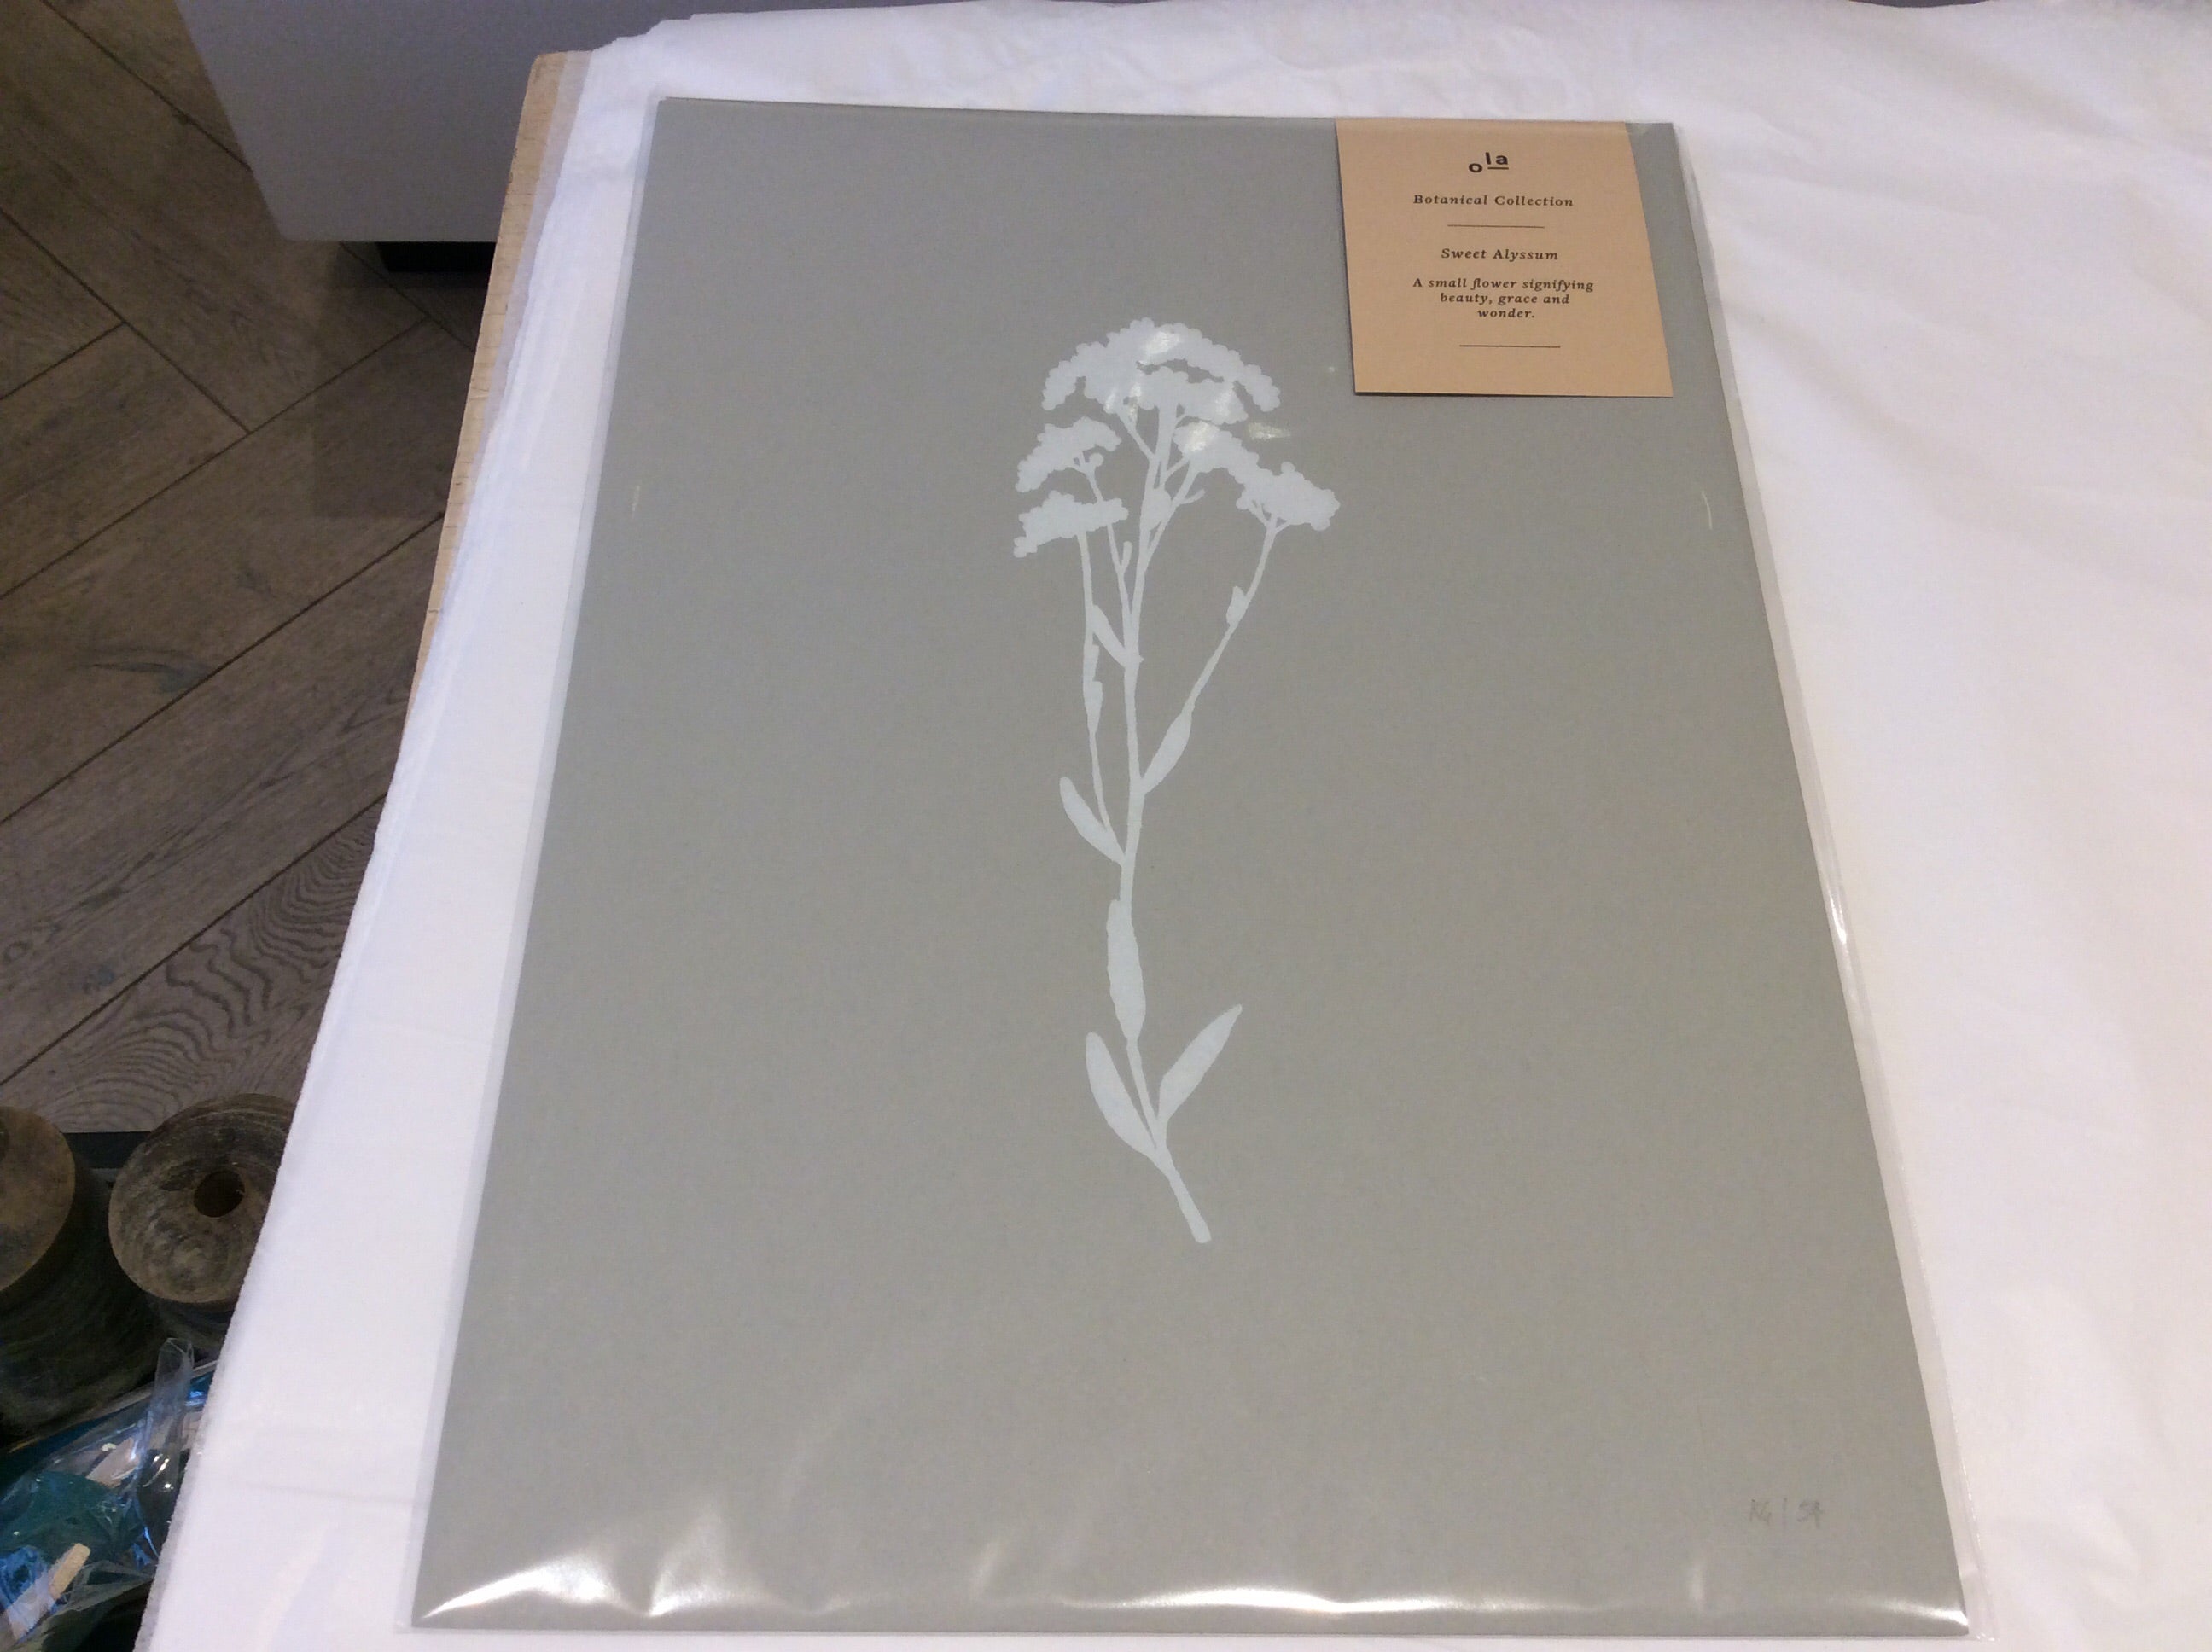 Ola Sweet Alyssum Print - Botanical Collection - Grey by ola - Lifestory - ola